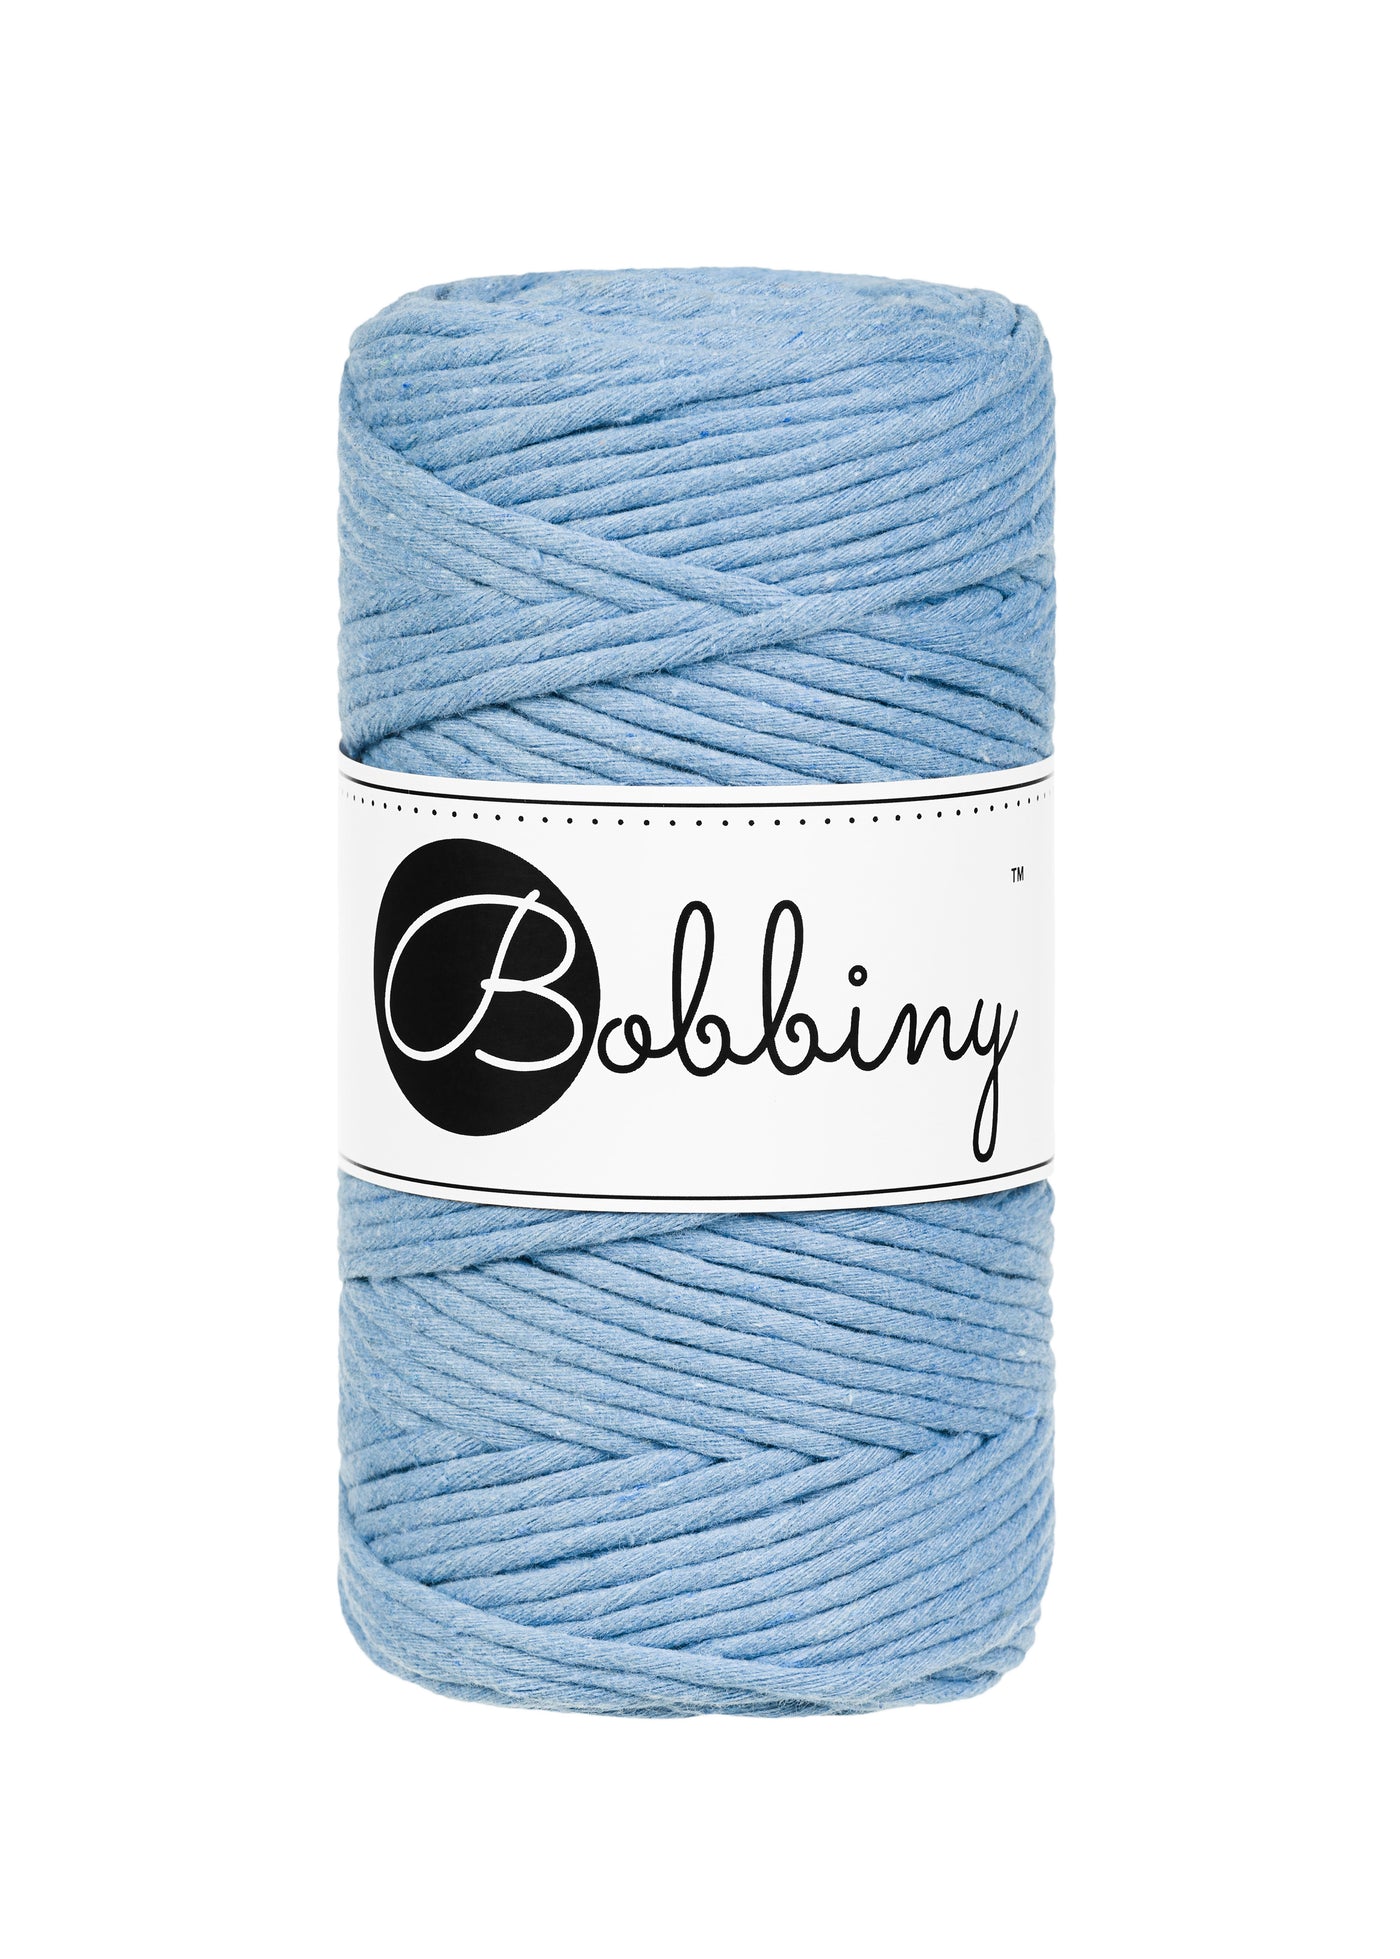 Bobbiny single twist cord in perfect blue shade